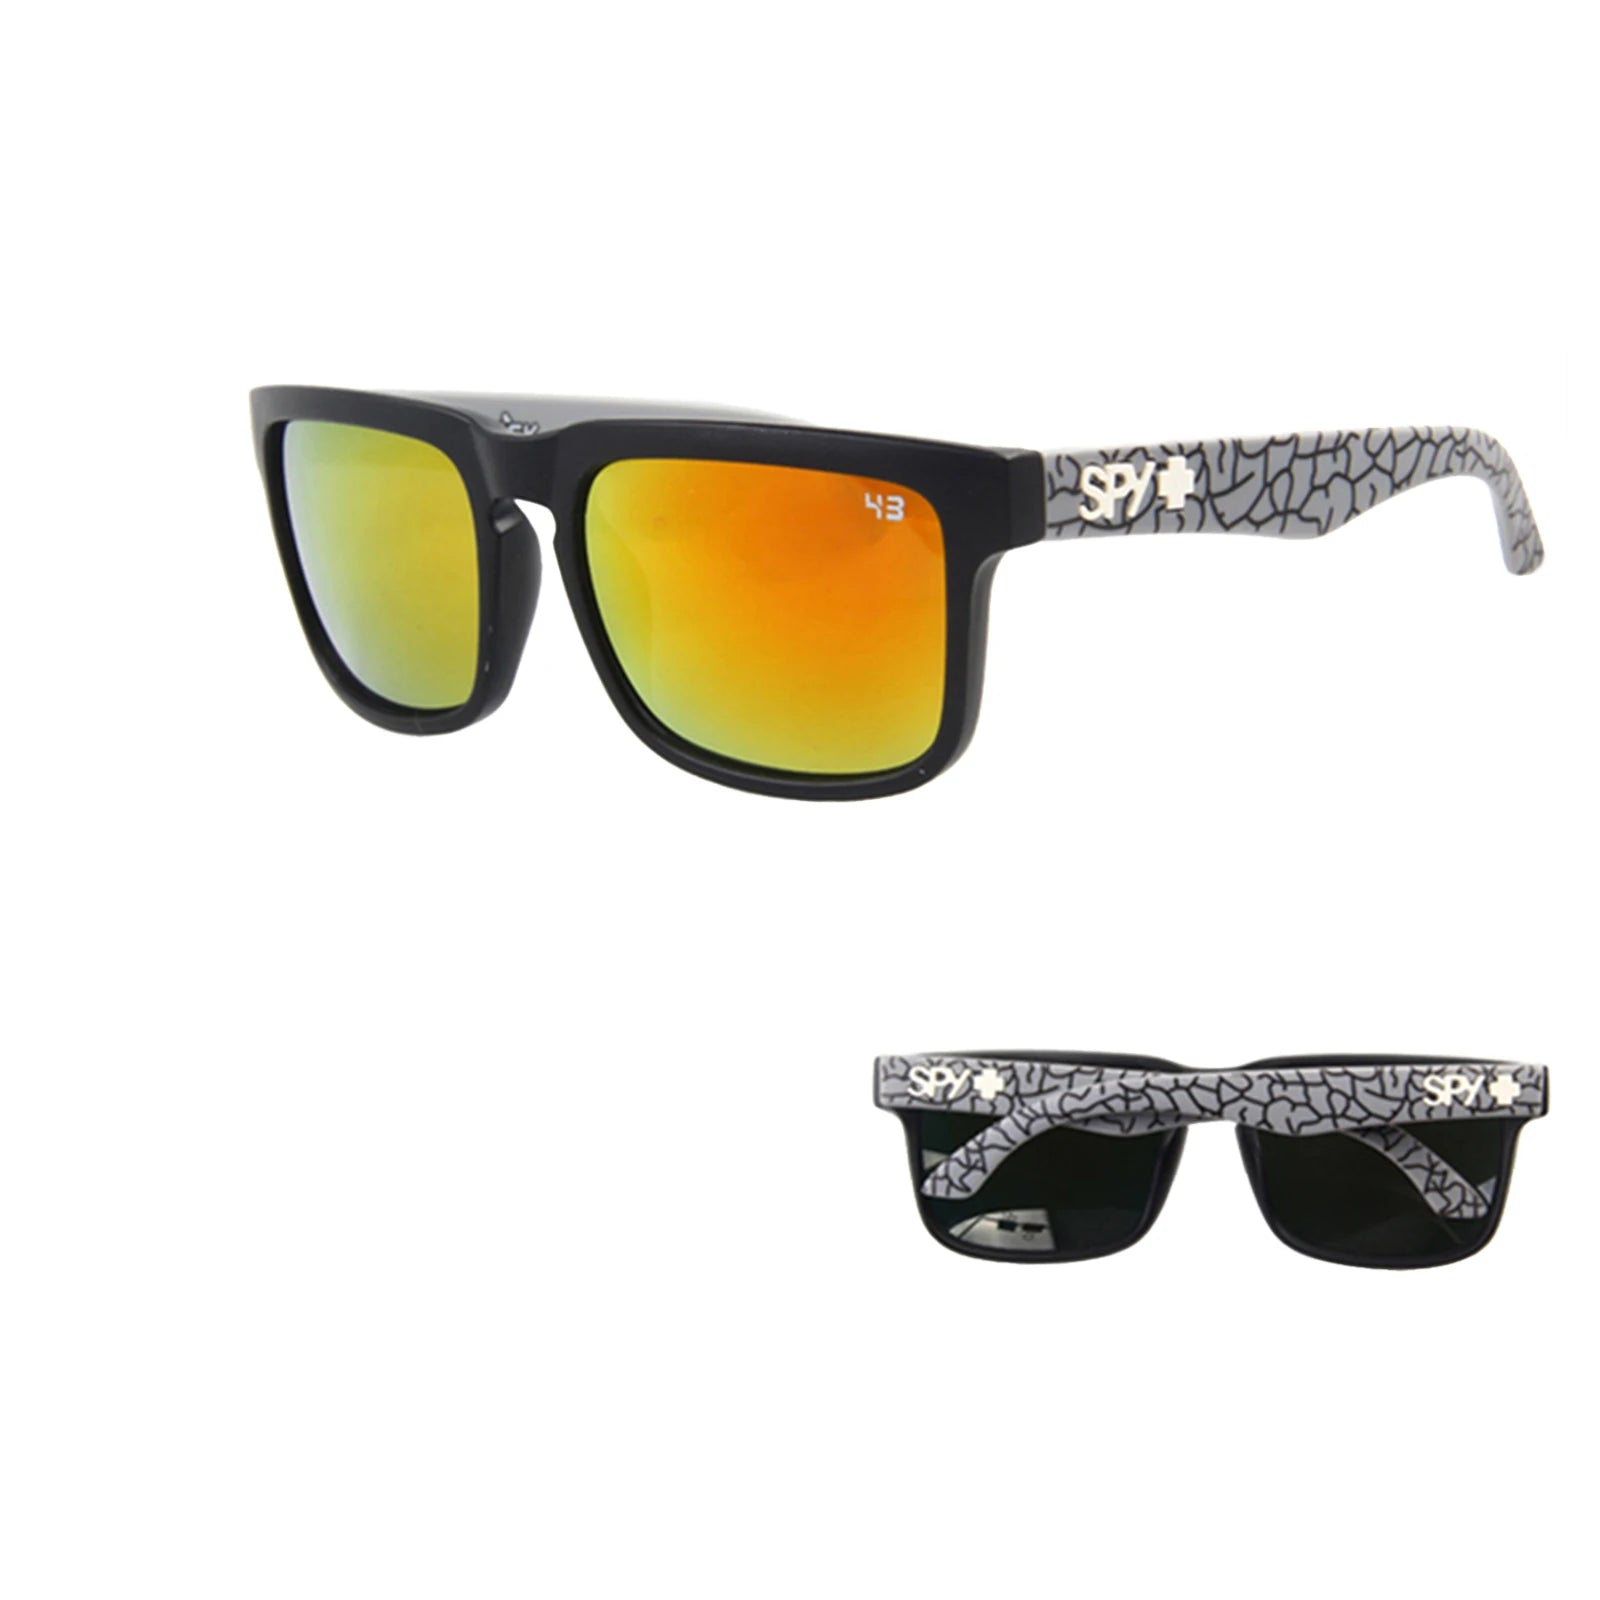 New Vintage Colorful Sunglasses Men Women Sports Fashion Beach Travel Sun Glasses UV400 Goggles - Madeinsea©